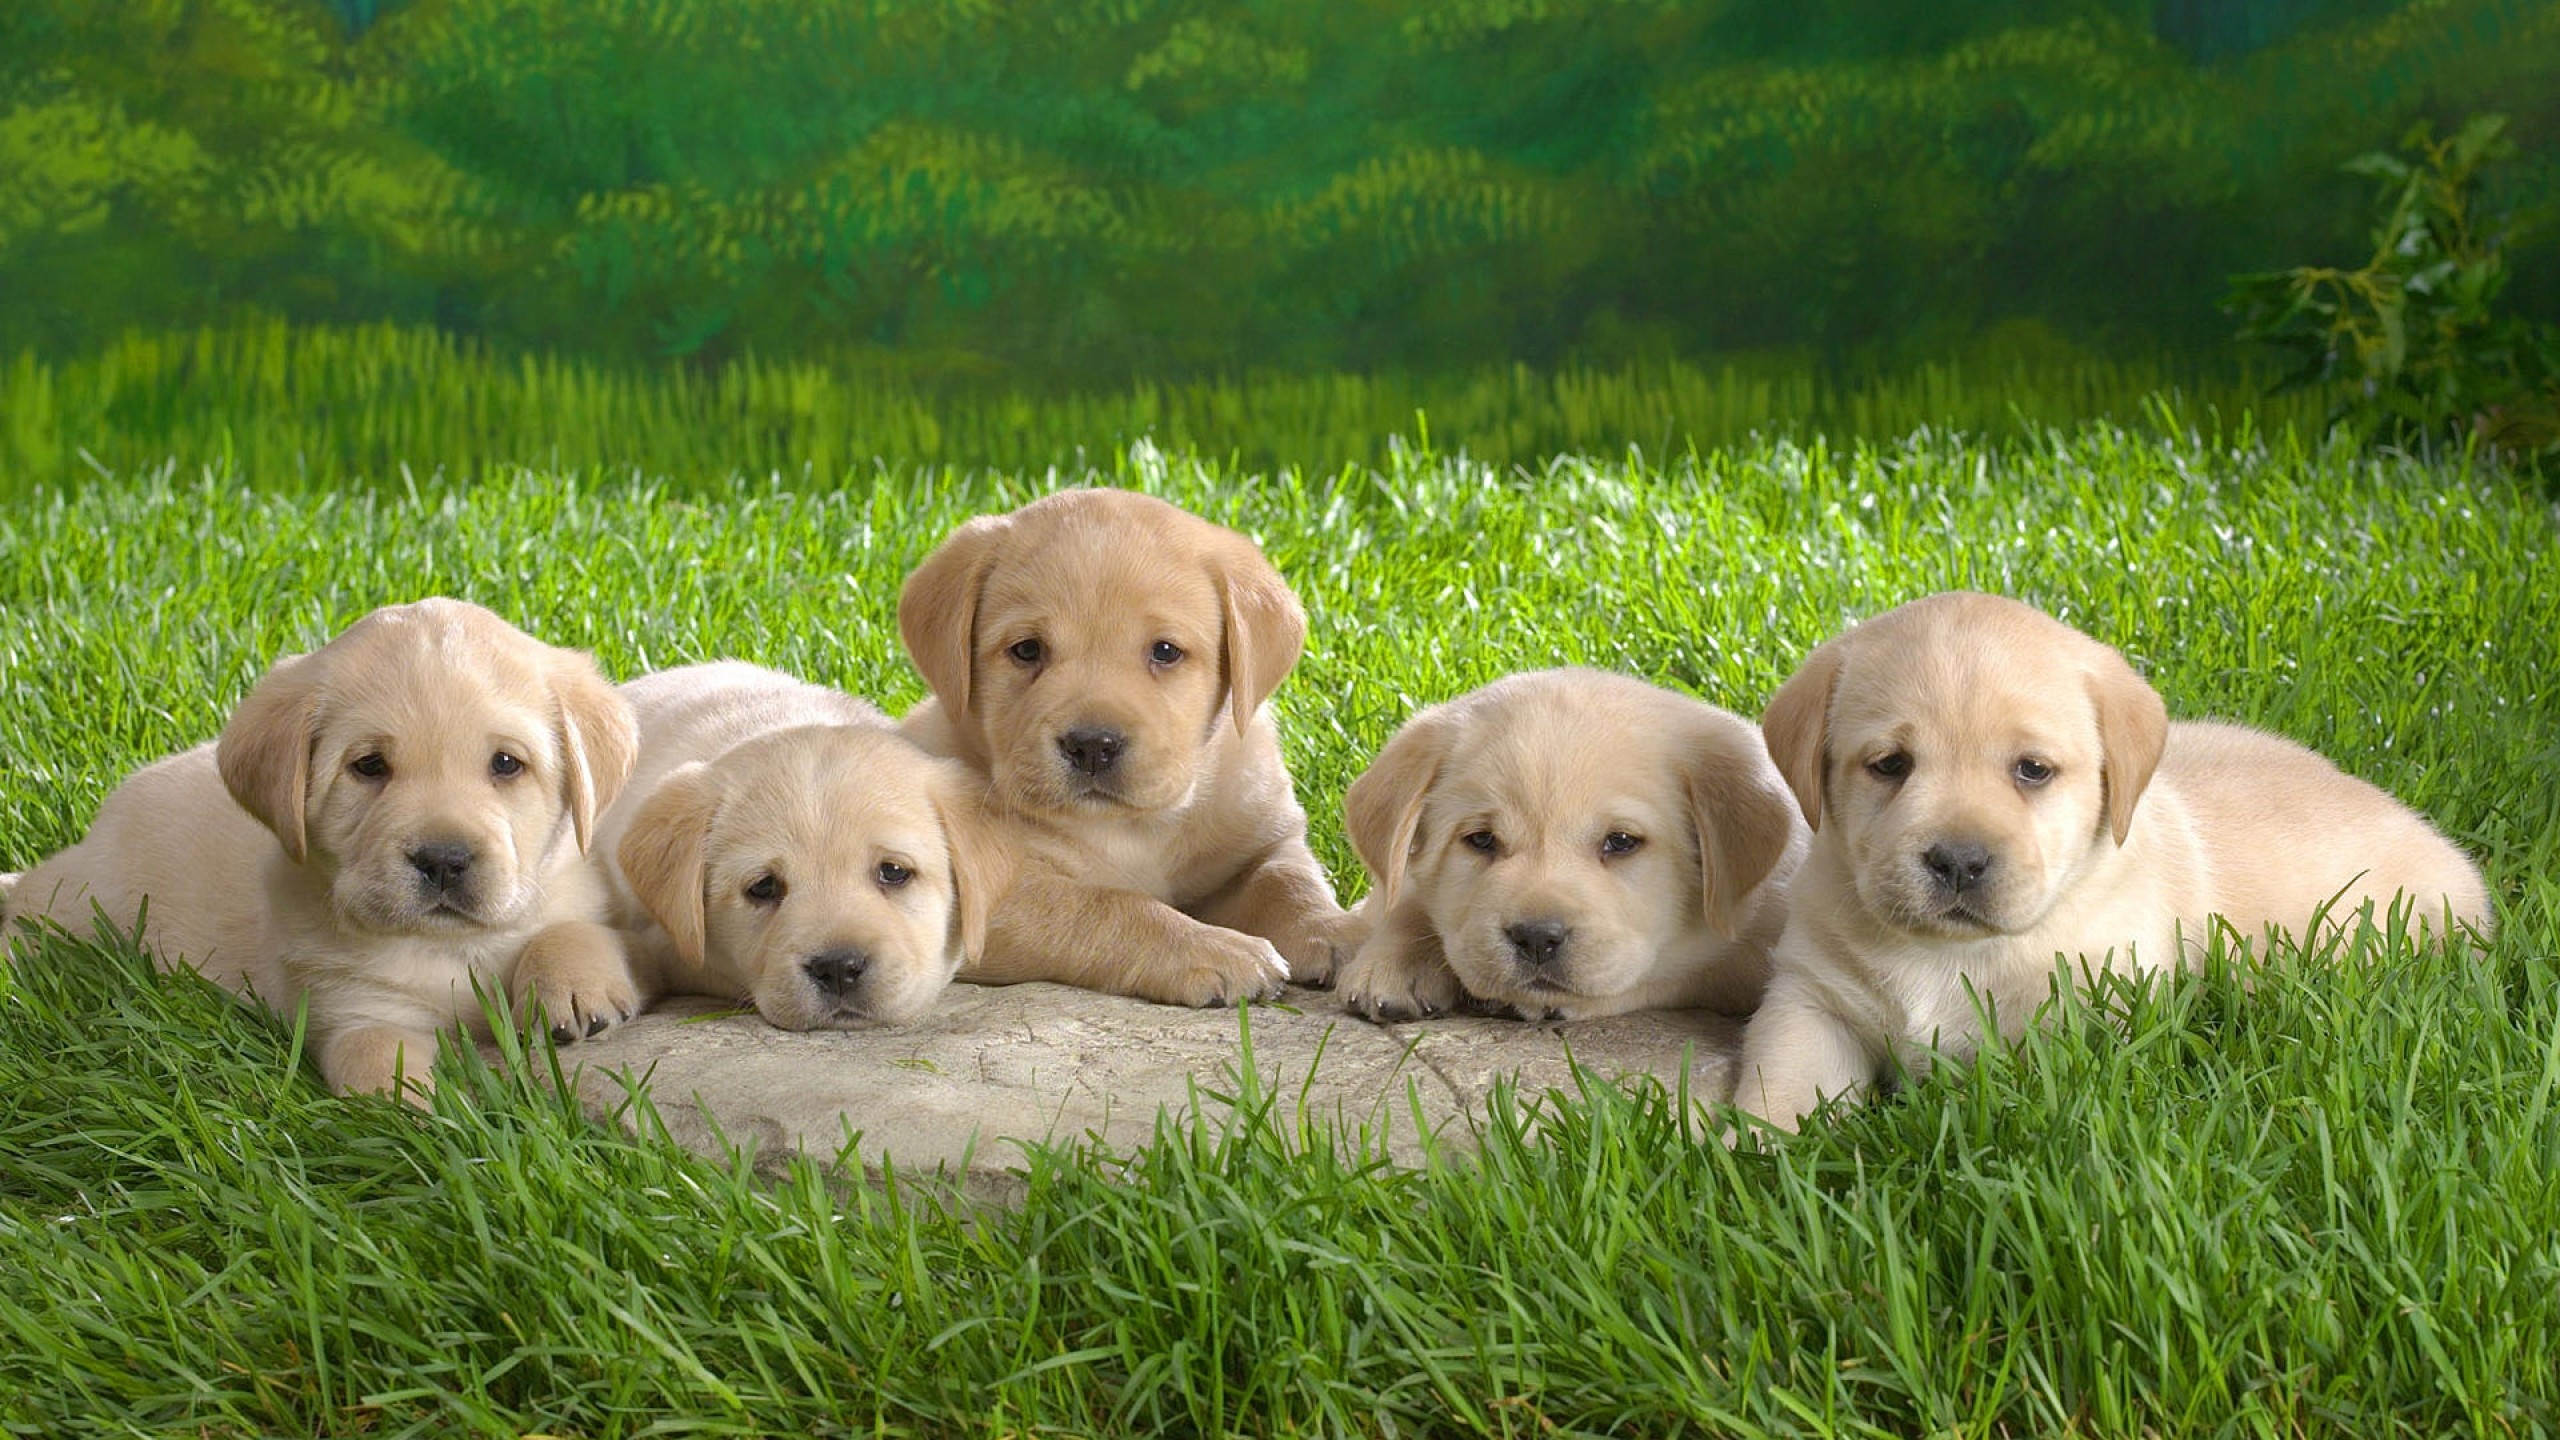 Cute Labrador Puppies Wallpapers Hd Free - Puppies Wallpaper For Desktop -  1920x1200 Wallpaper 